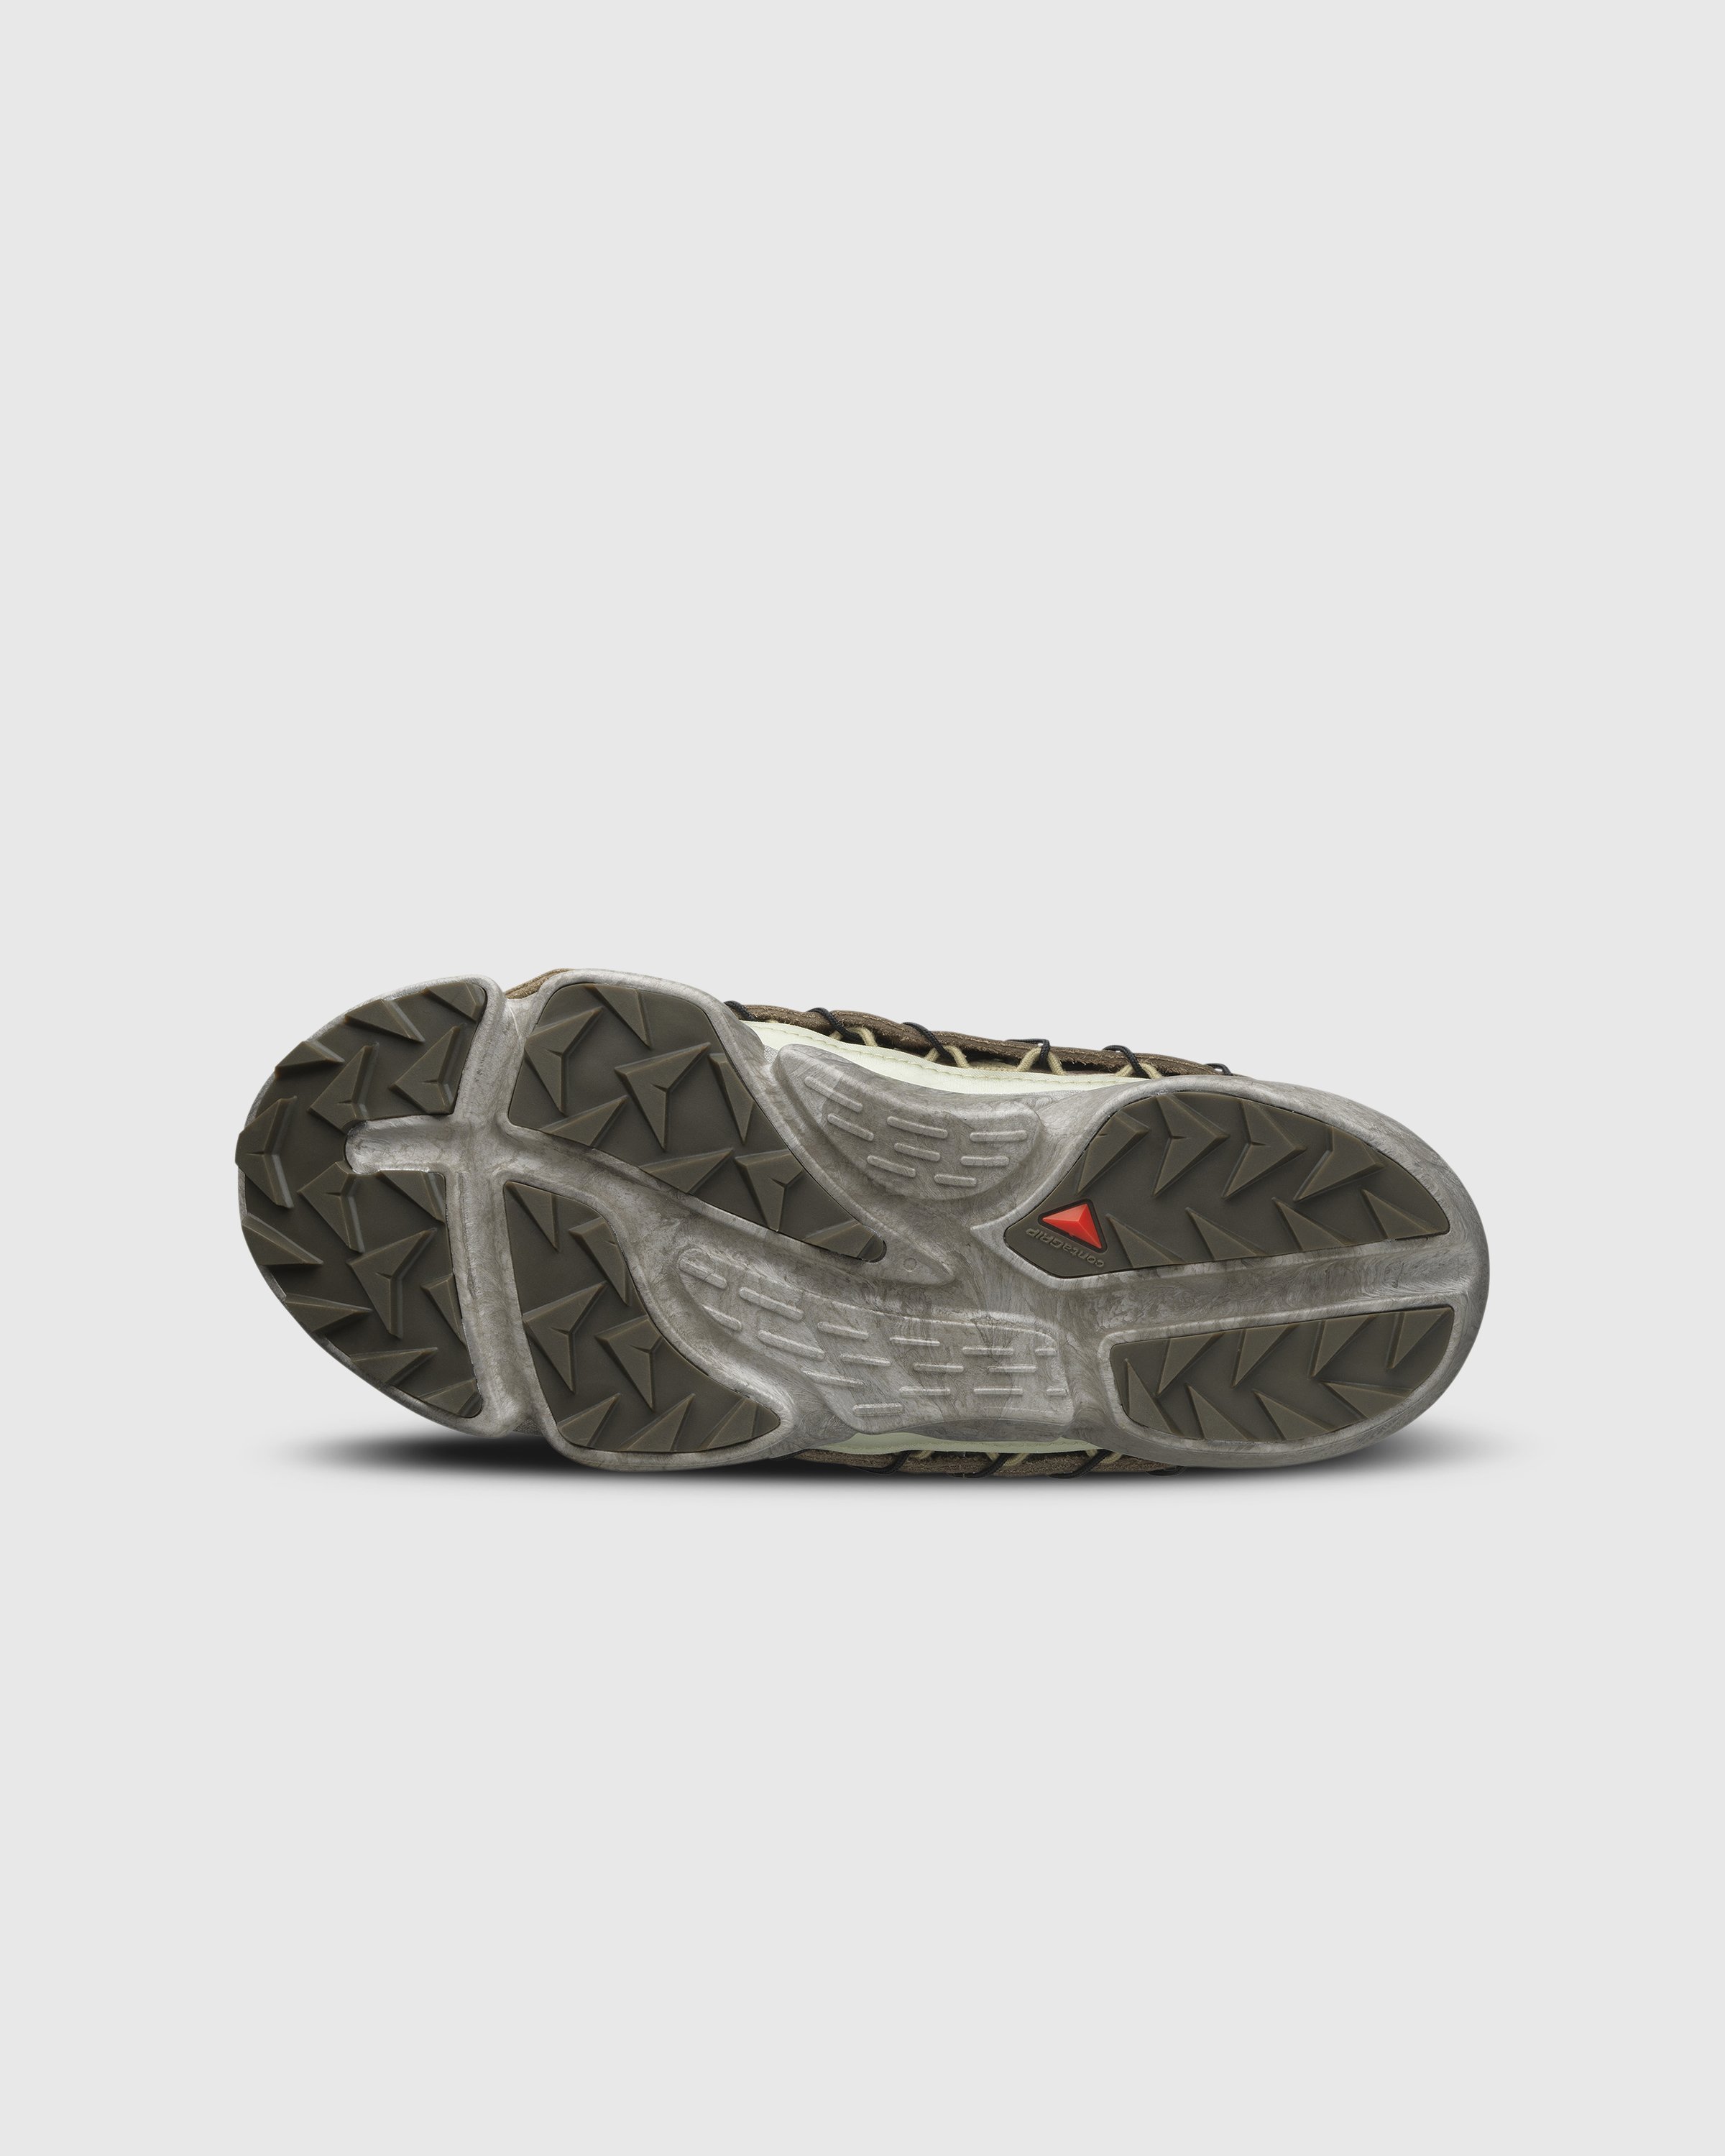 RANRA x Salomon - SKOR RANRA Bleached Sand/Alfalfa/Slate Green - Footwear - Multi - Image 8